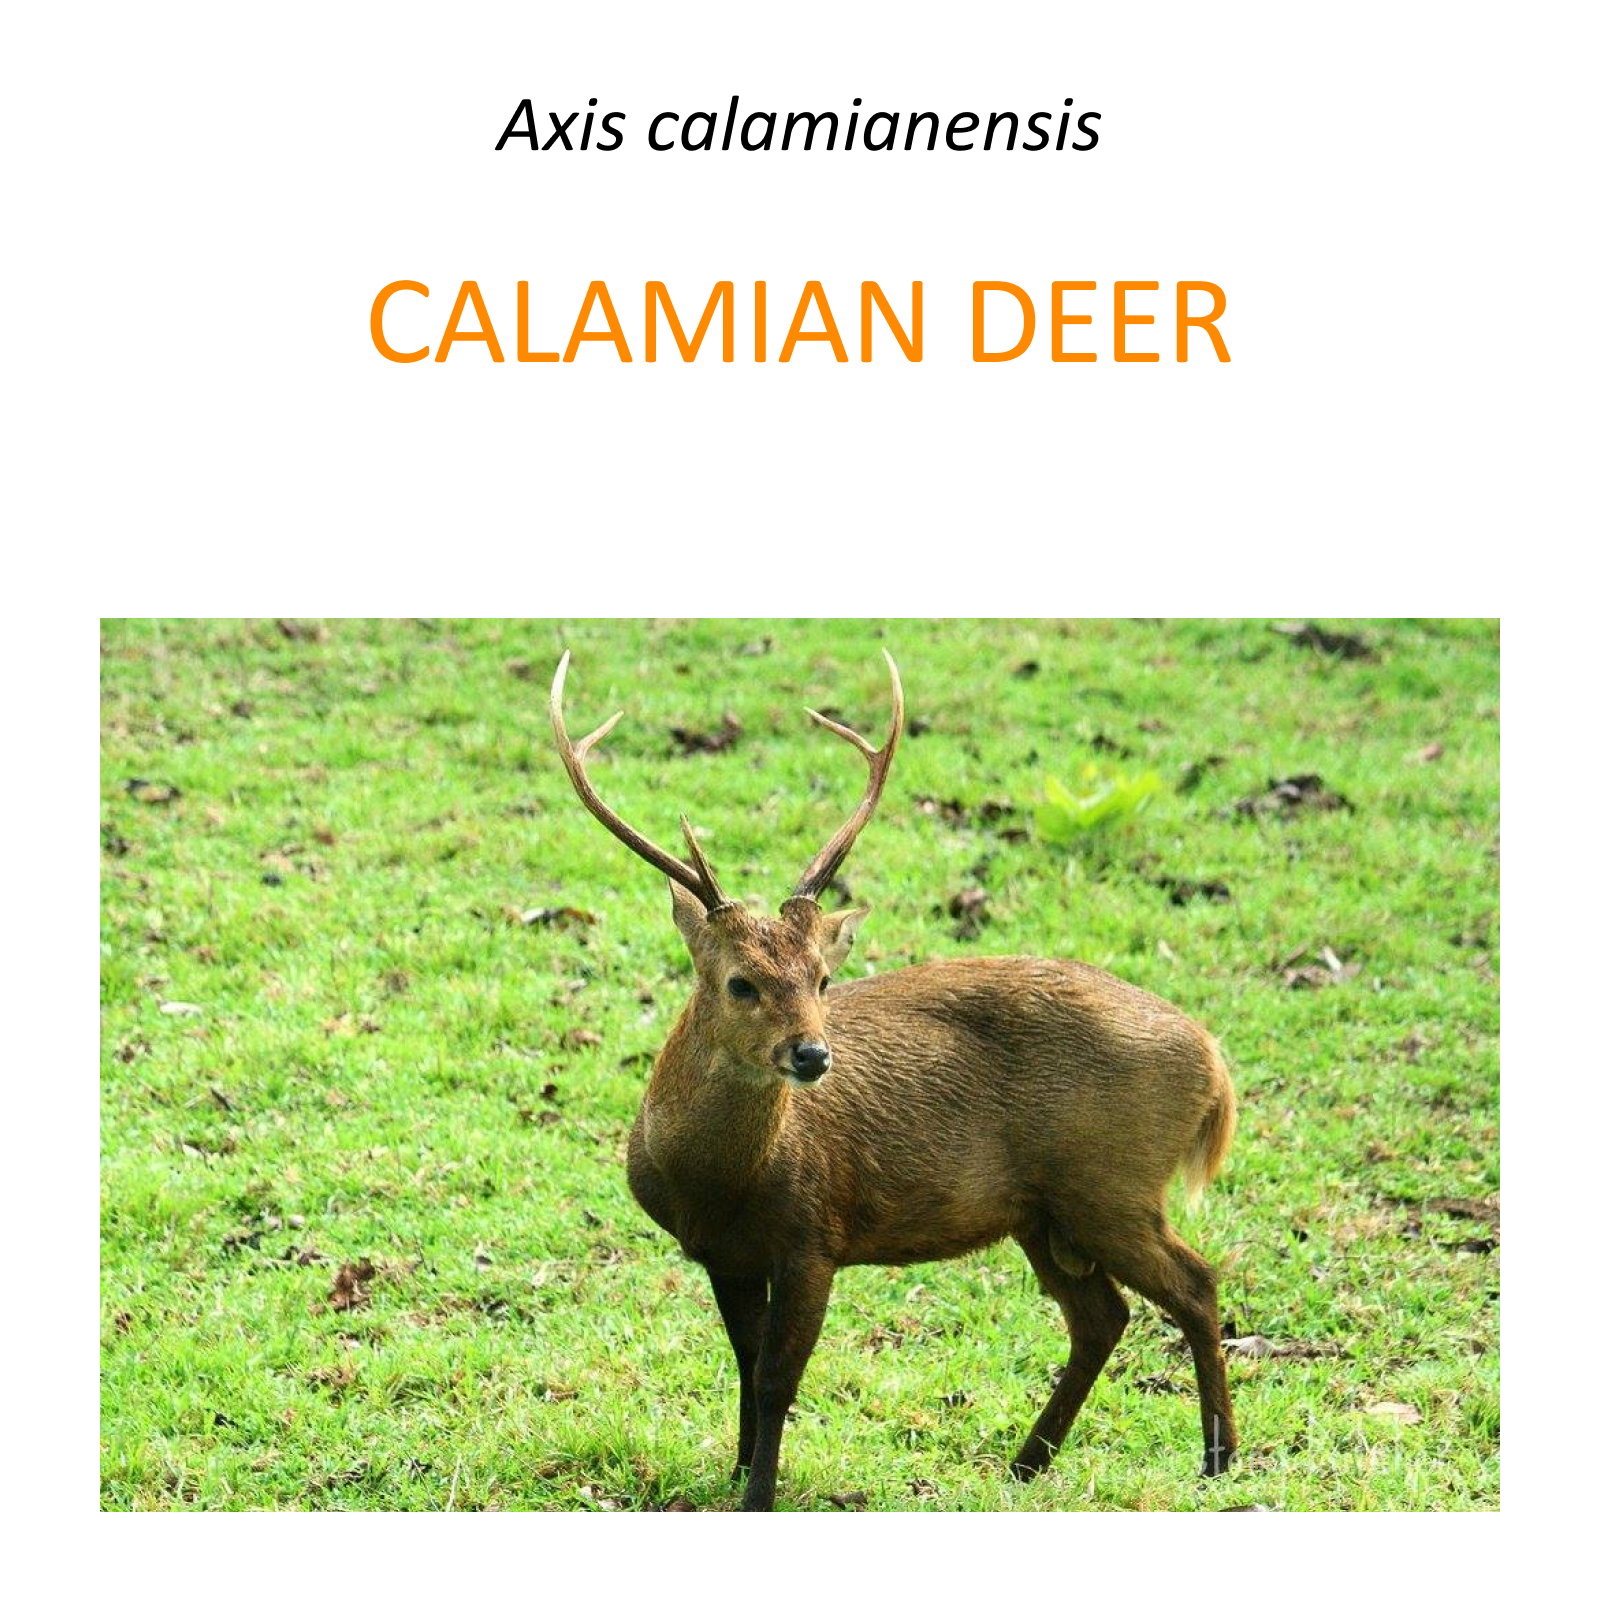 Calamian deer conservation program